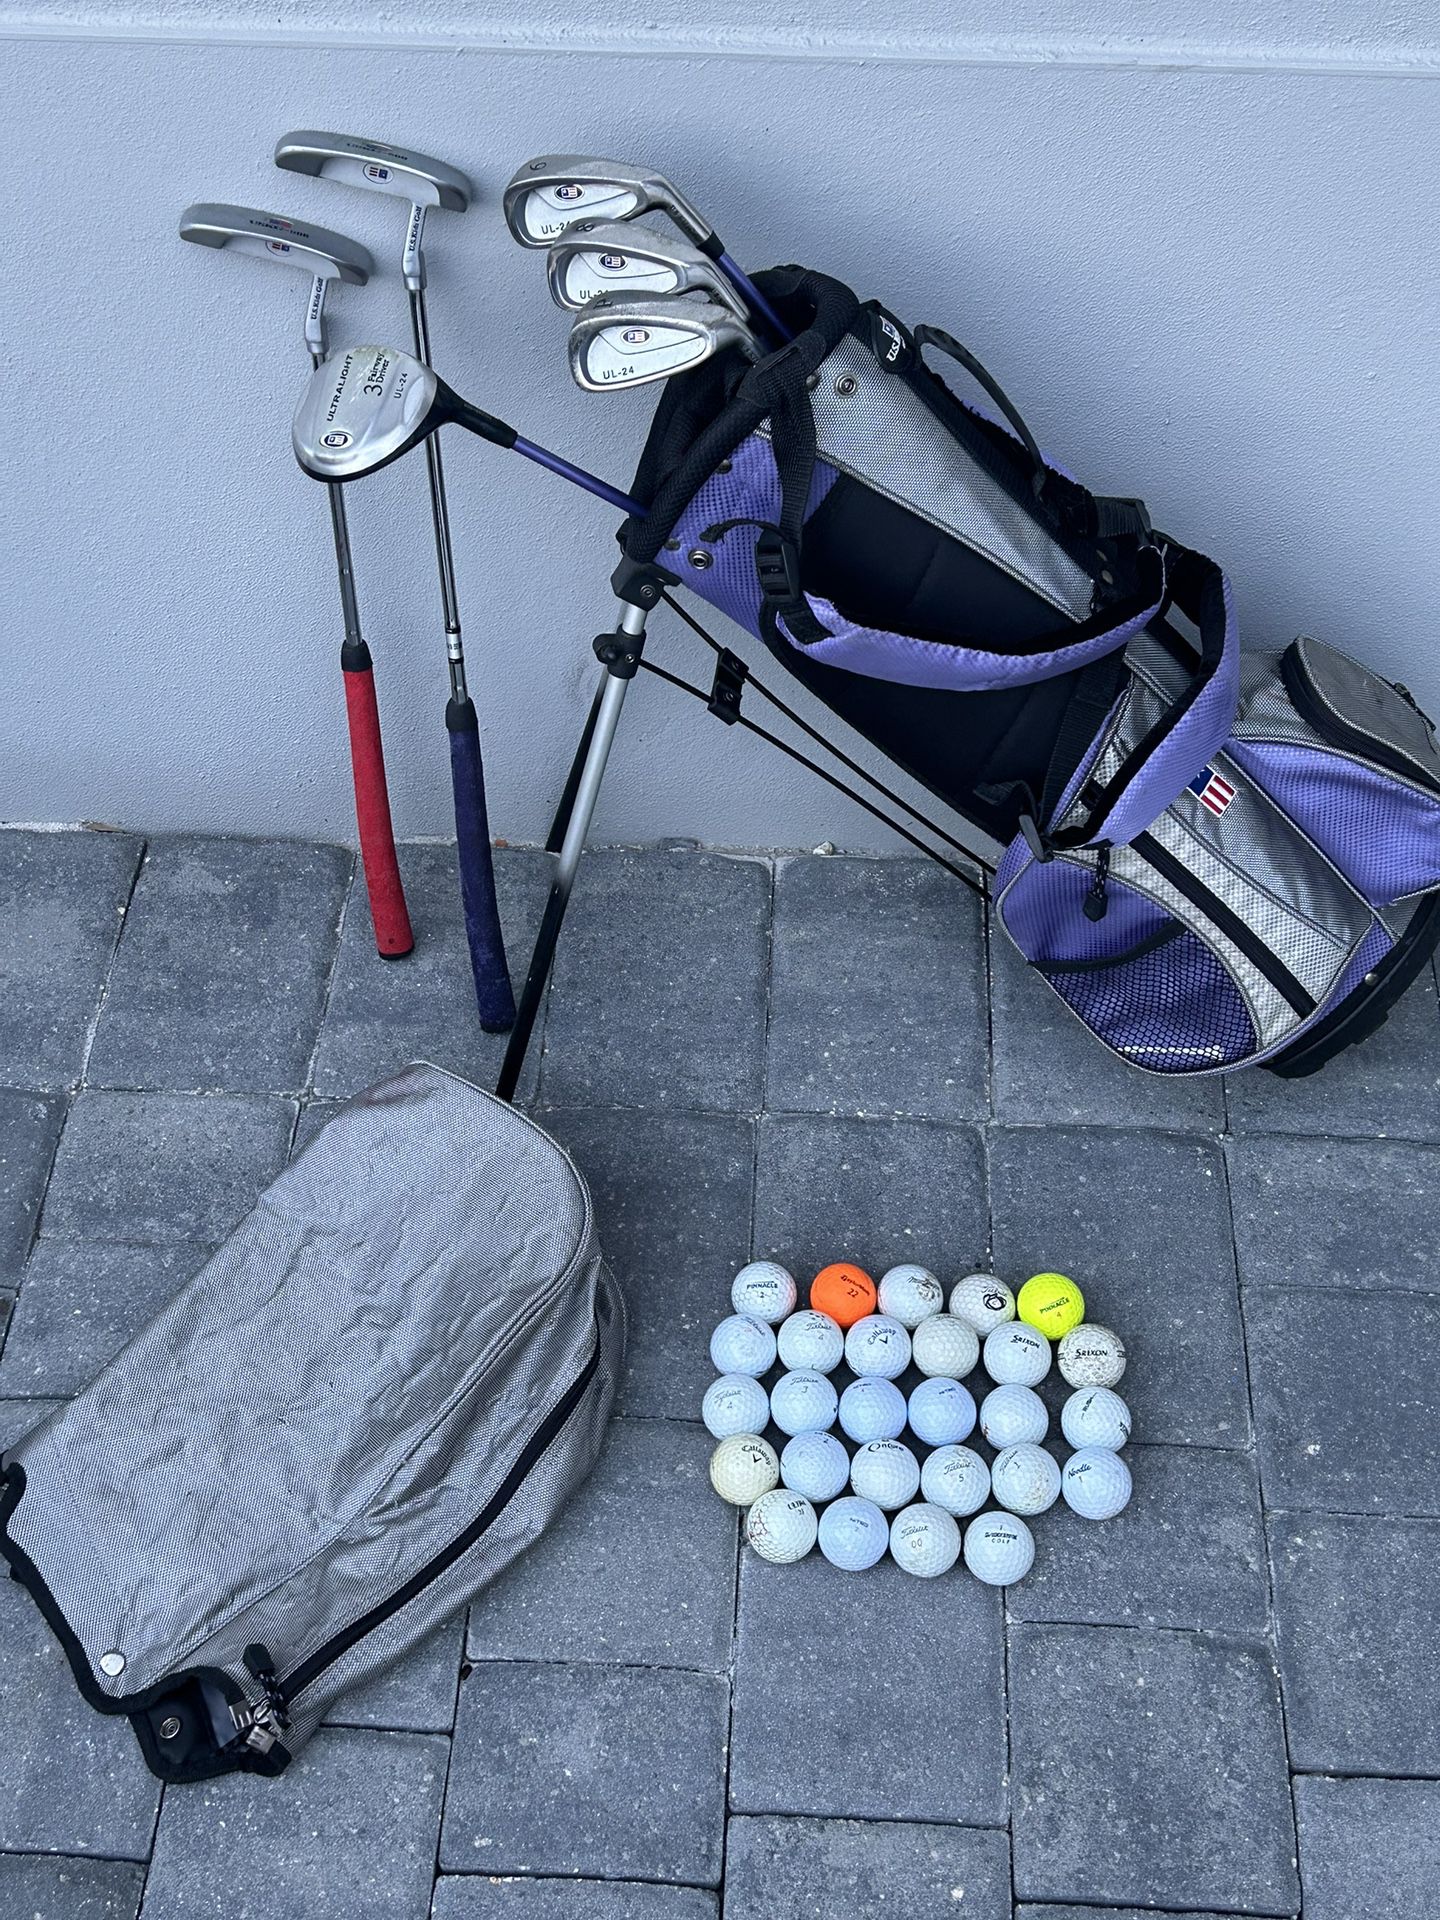 Ultralight kids Golf Club Set With Bag, Bag Cover And Golf Balls